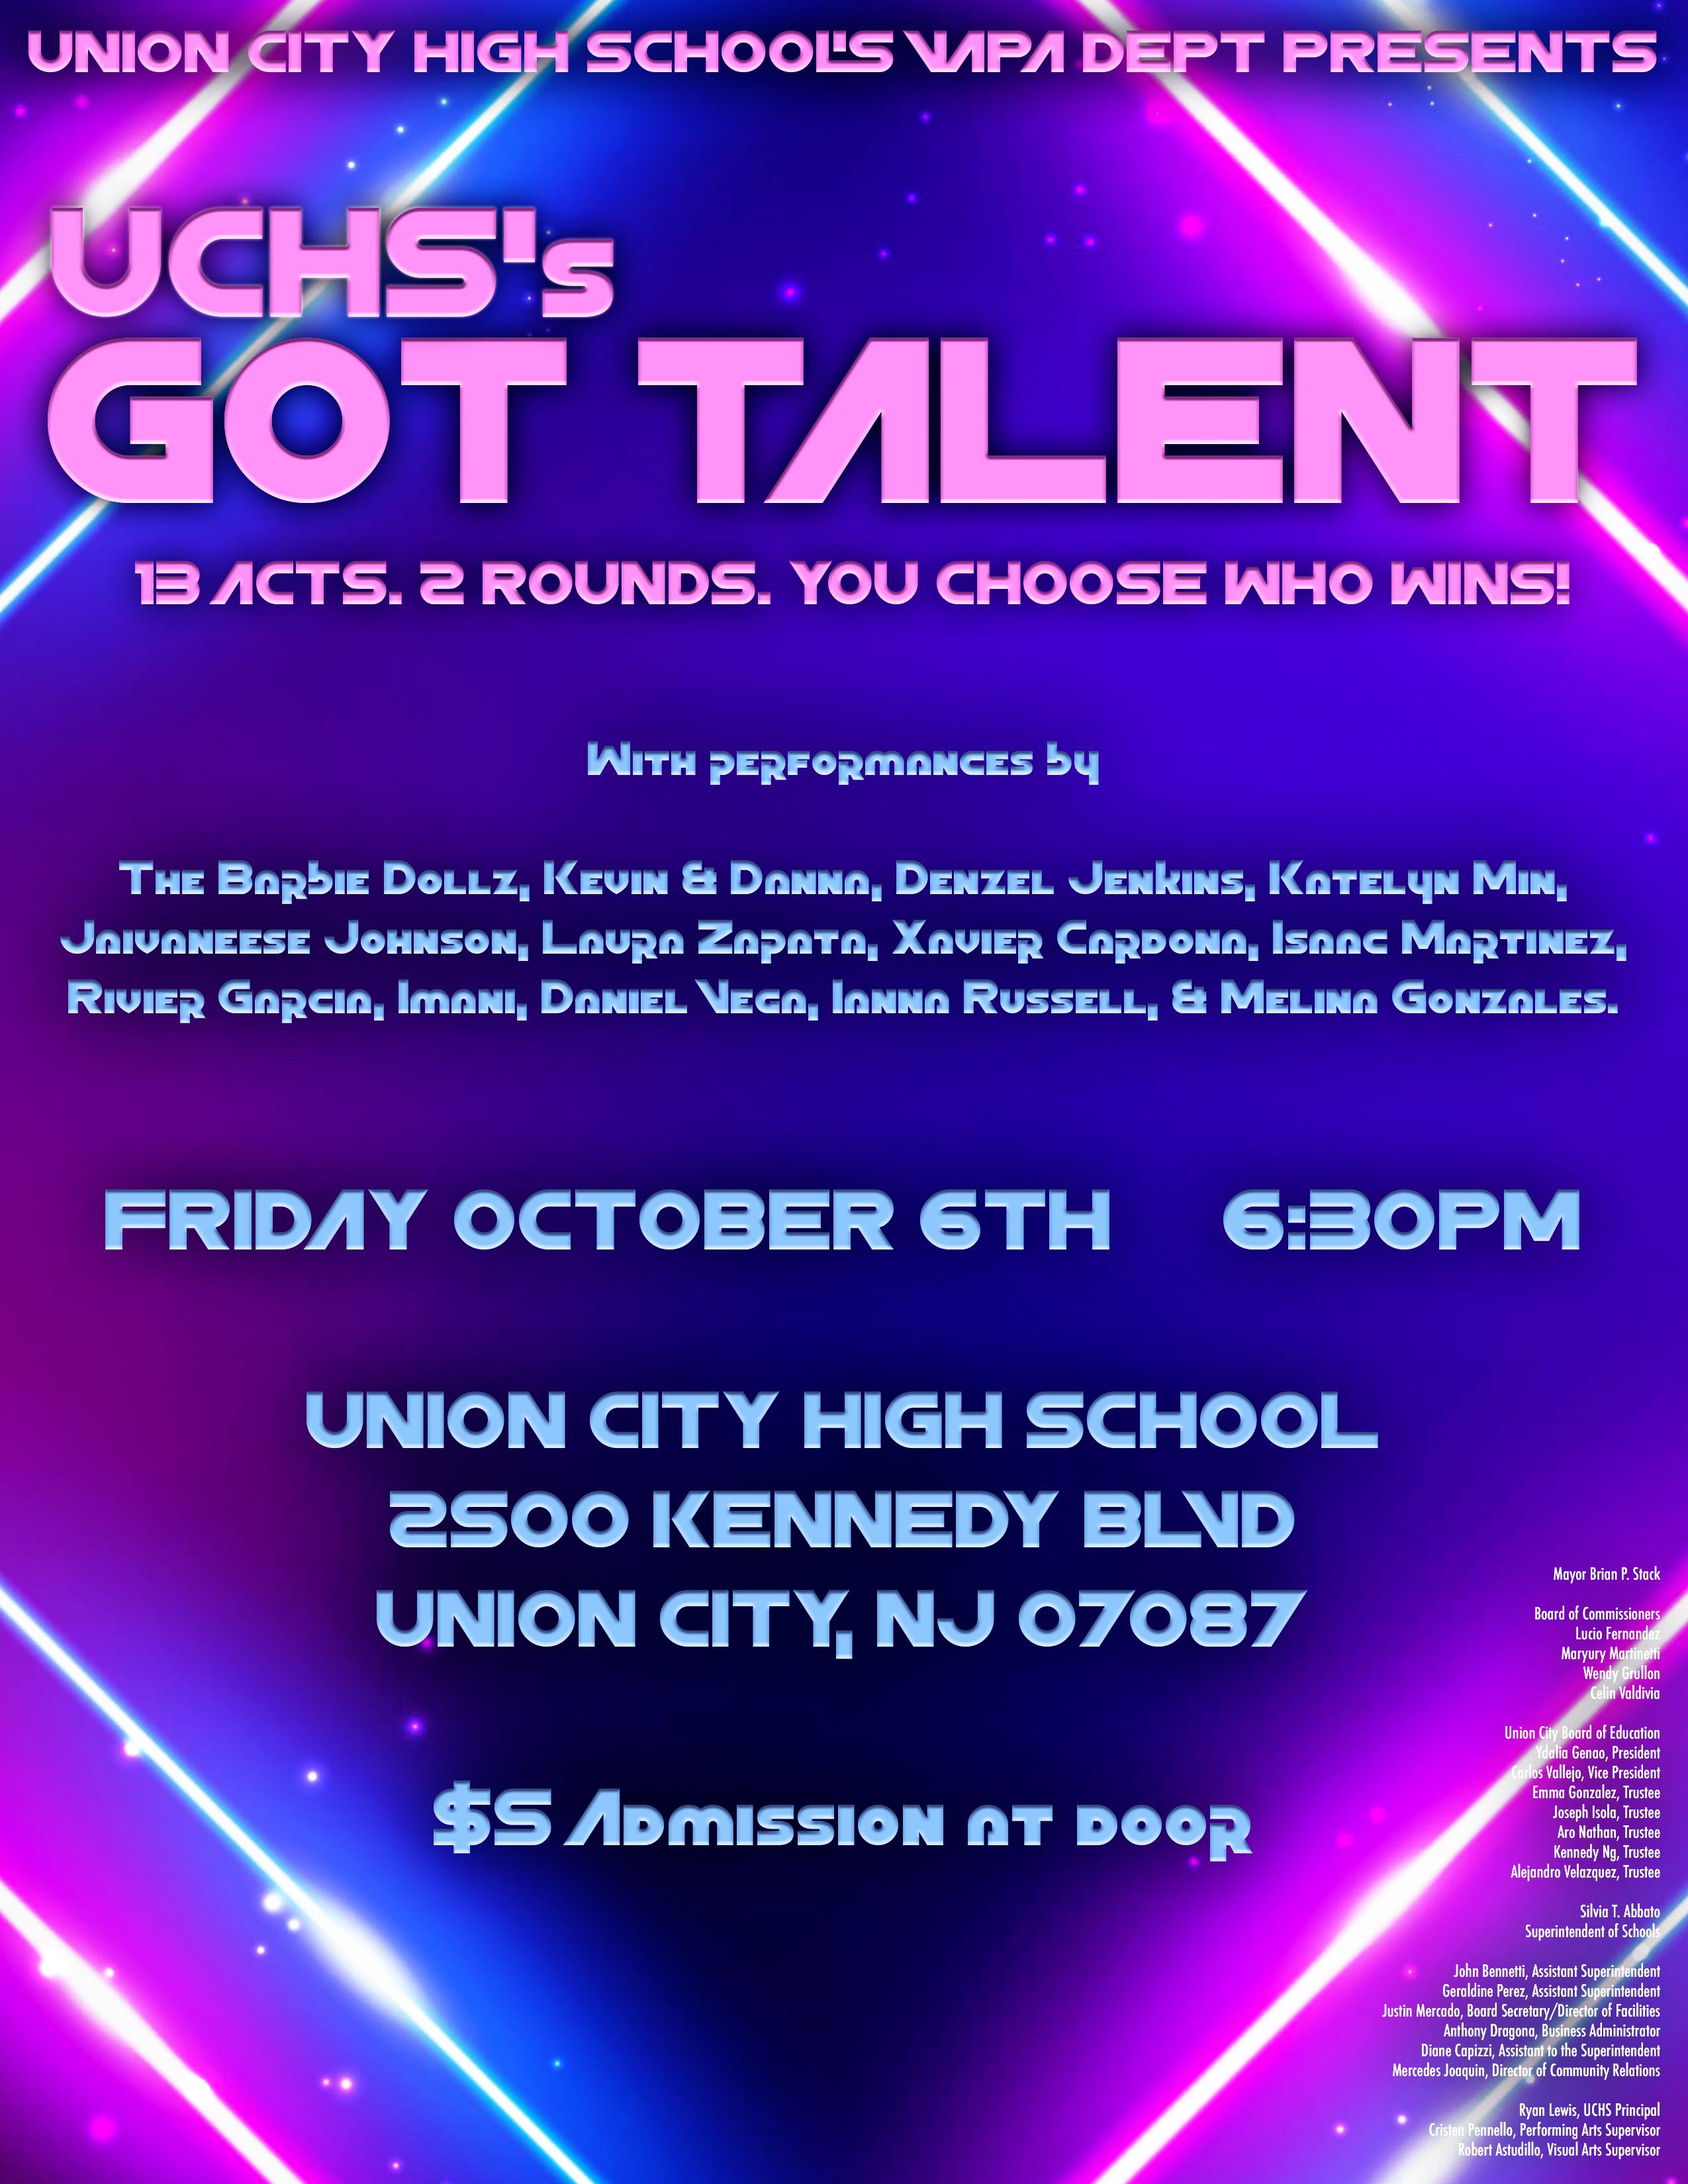 UCHS's Got Talent Show Flyer-English